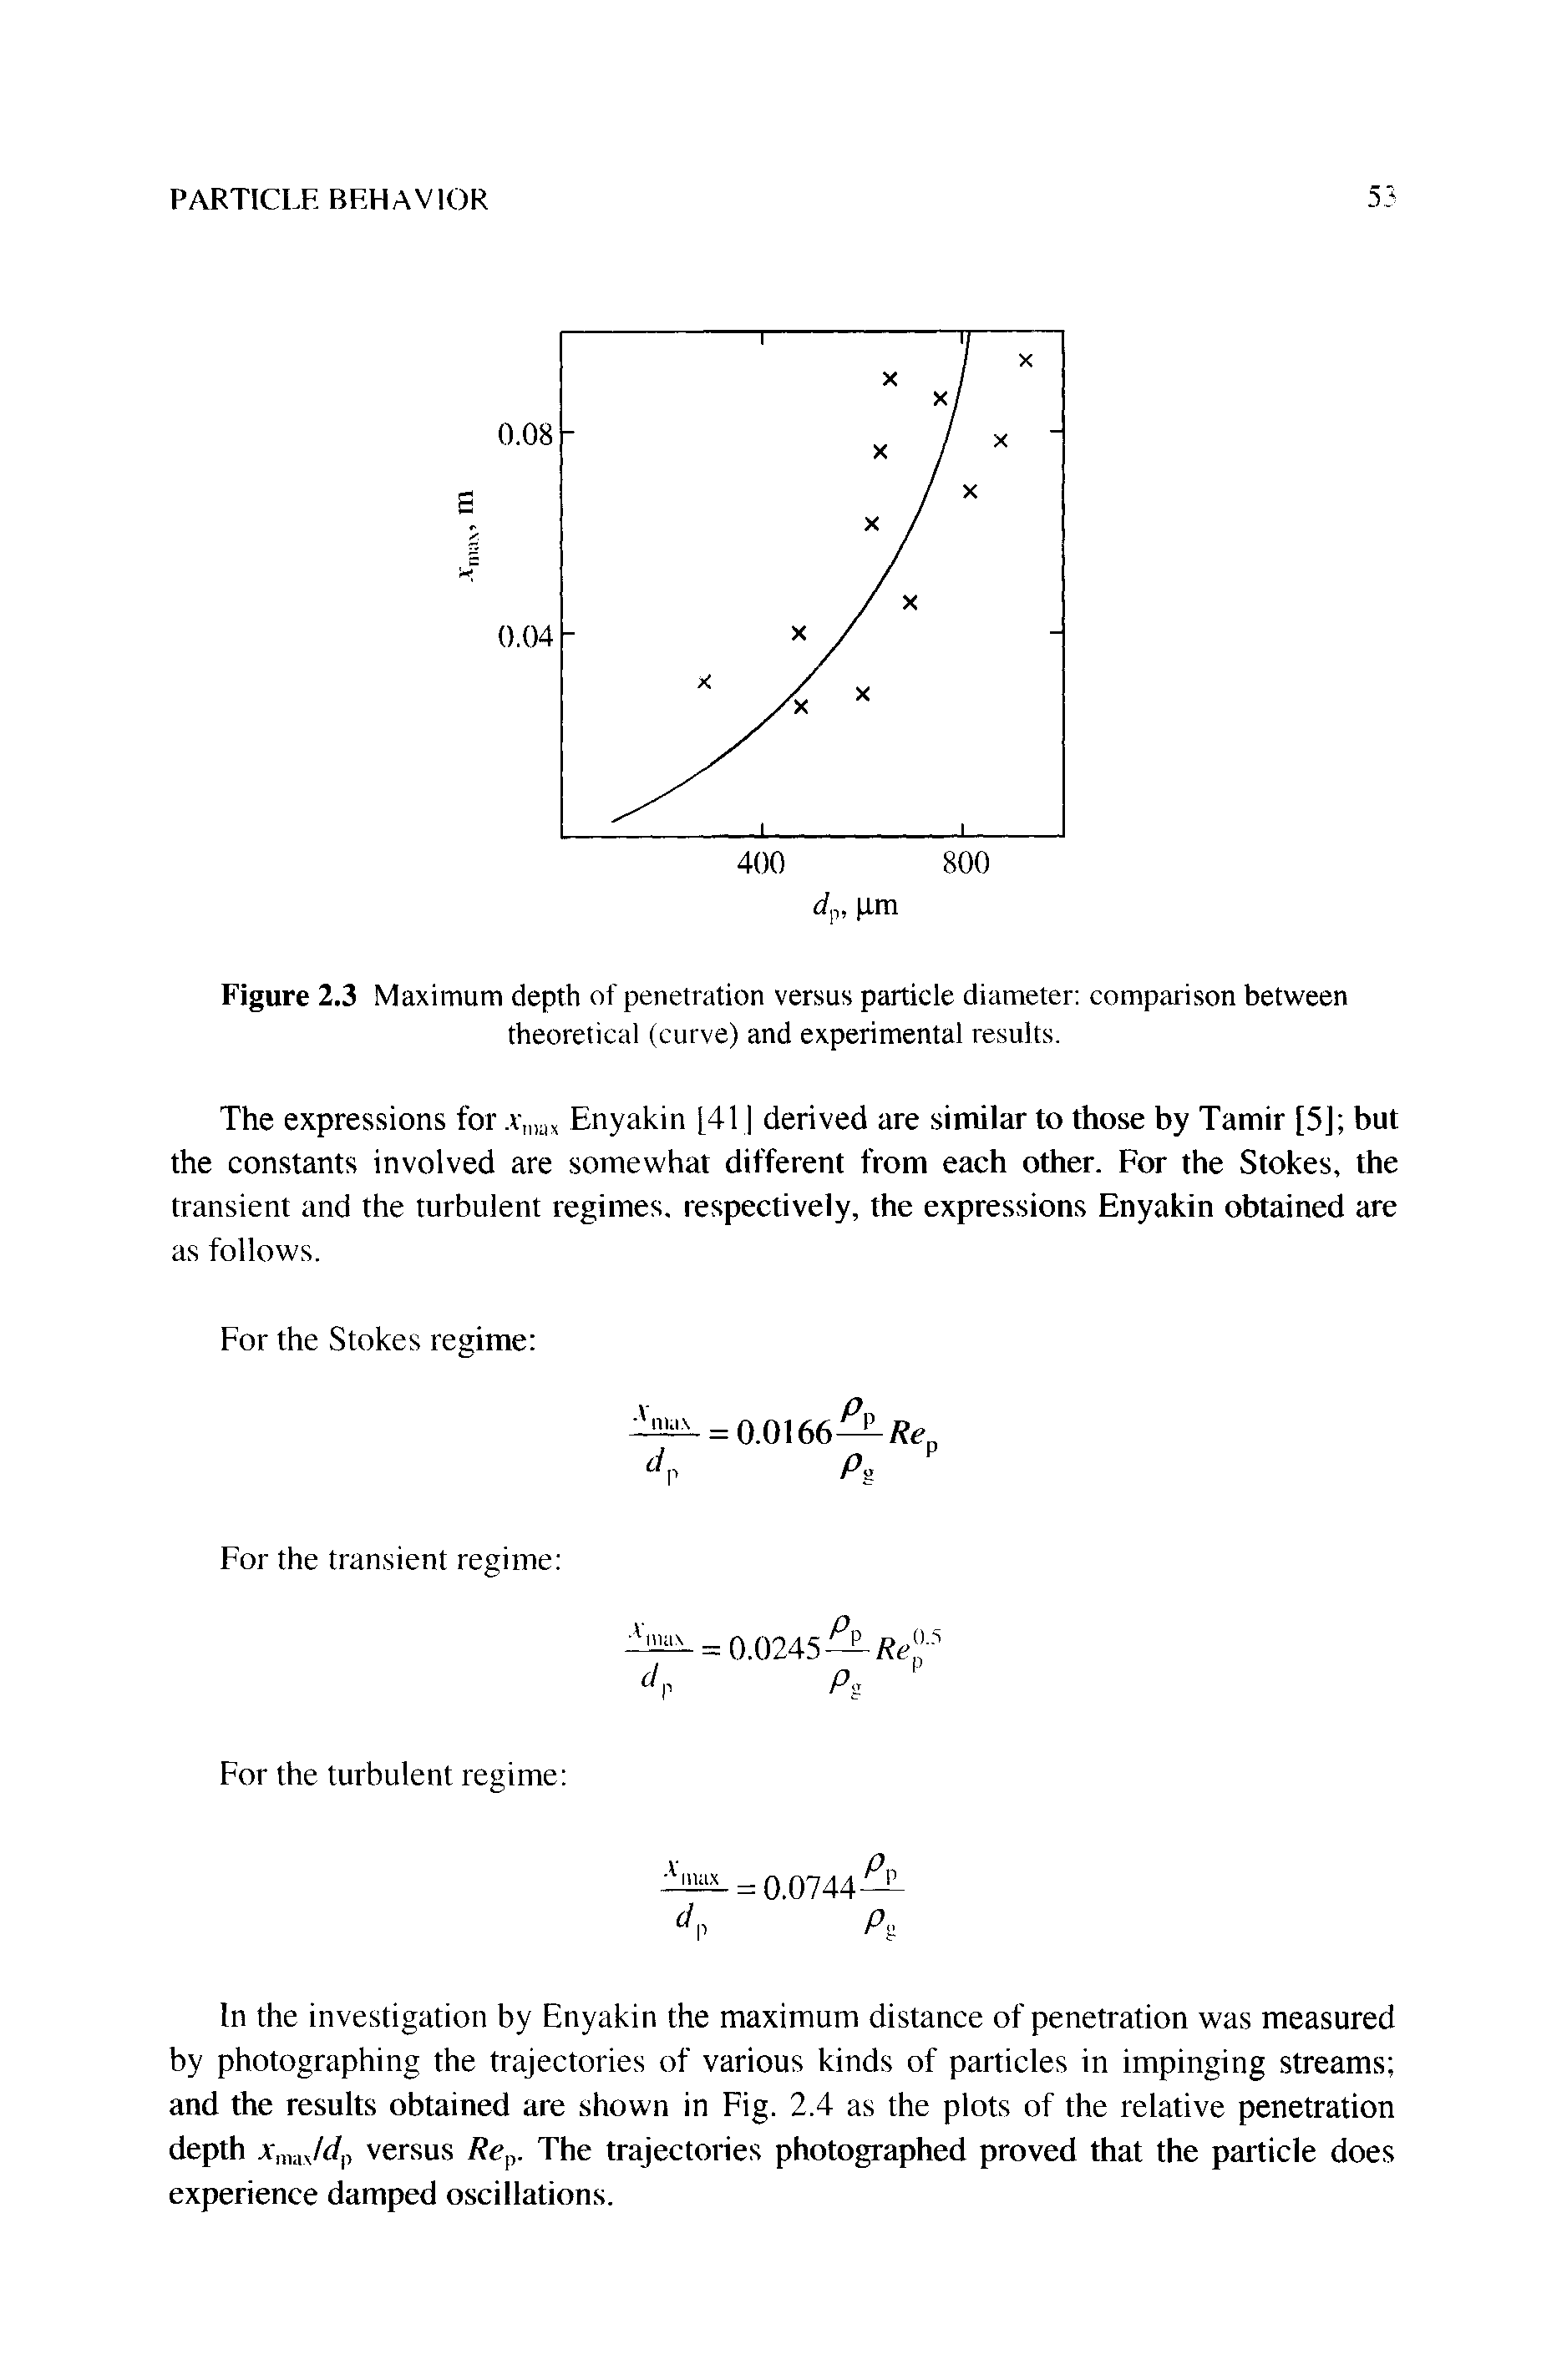 Figure 2.3 Maximum depth of penetration versus particle diameter comparison between theoretical (curve) and experimental results.